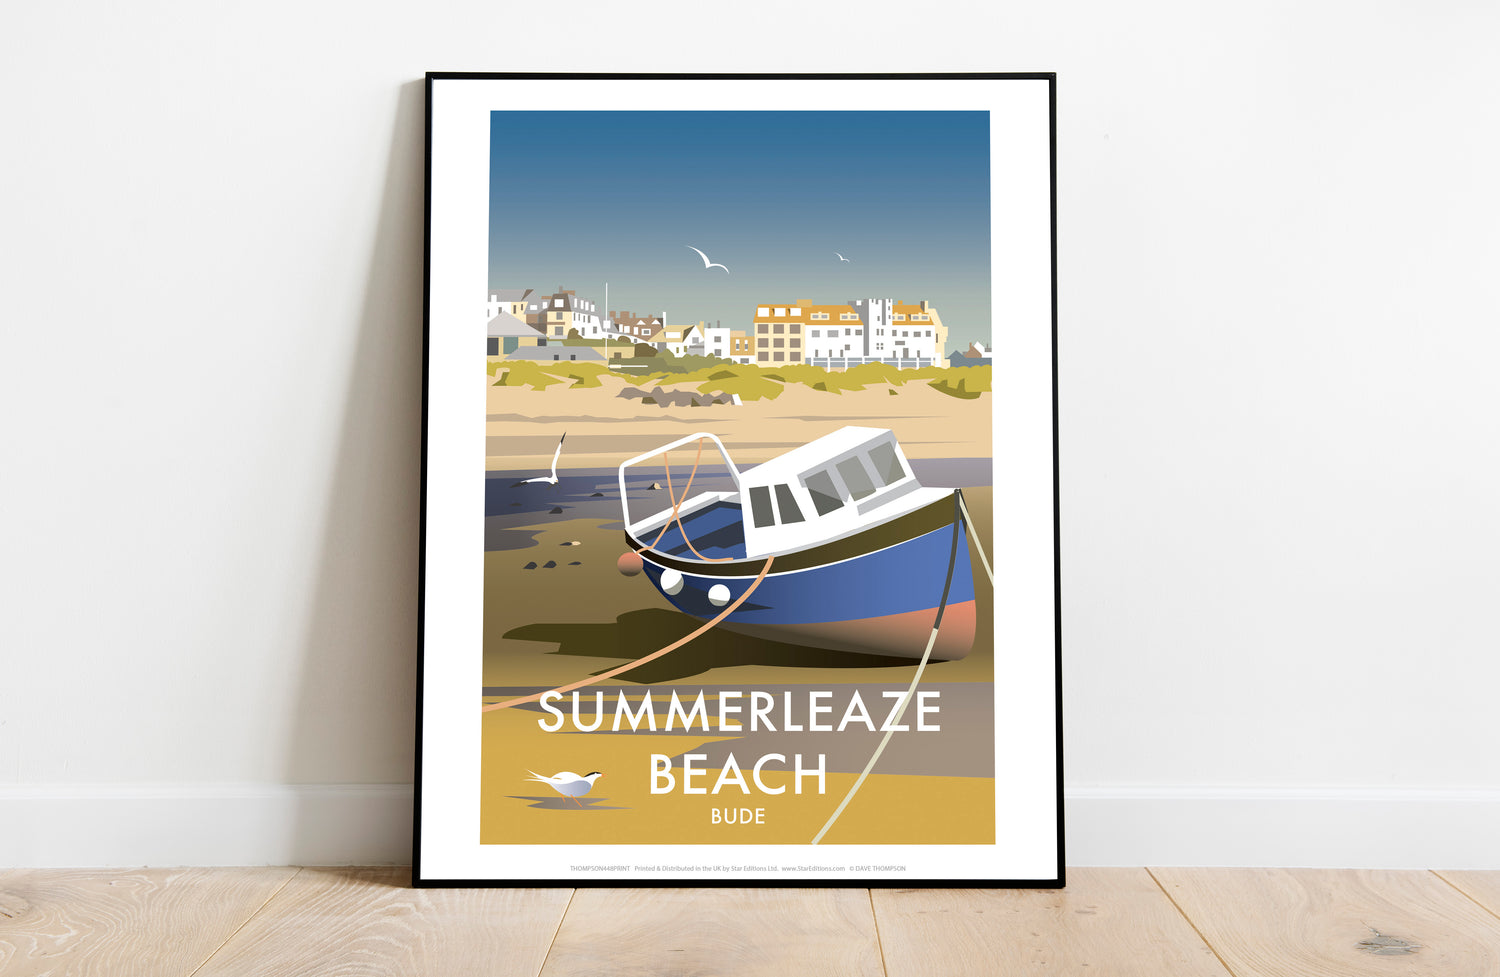 Summerleaze Beach, Cornwall - Art Print